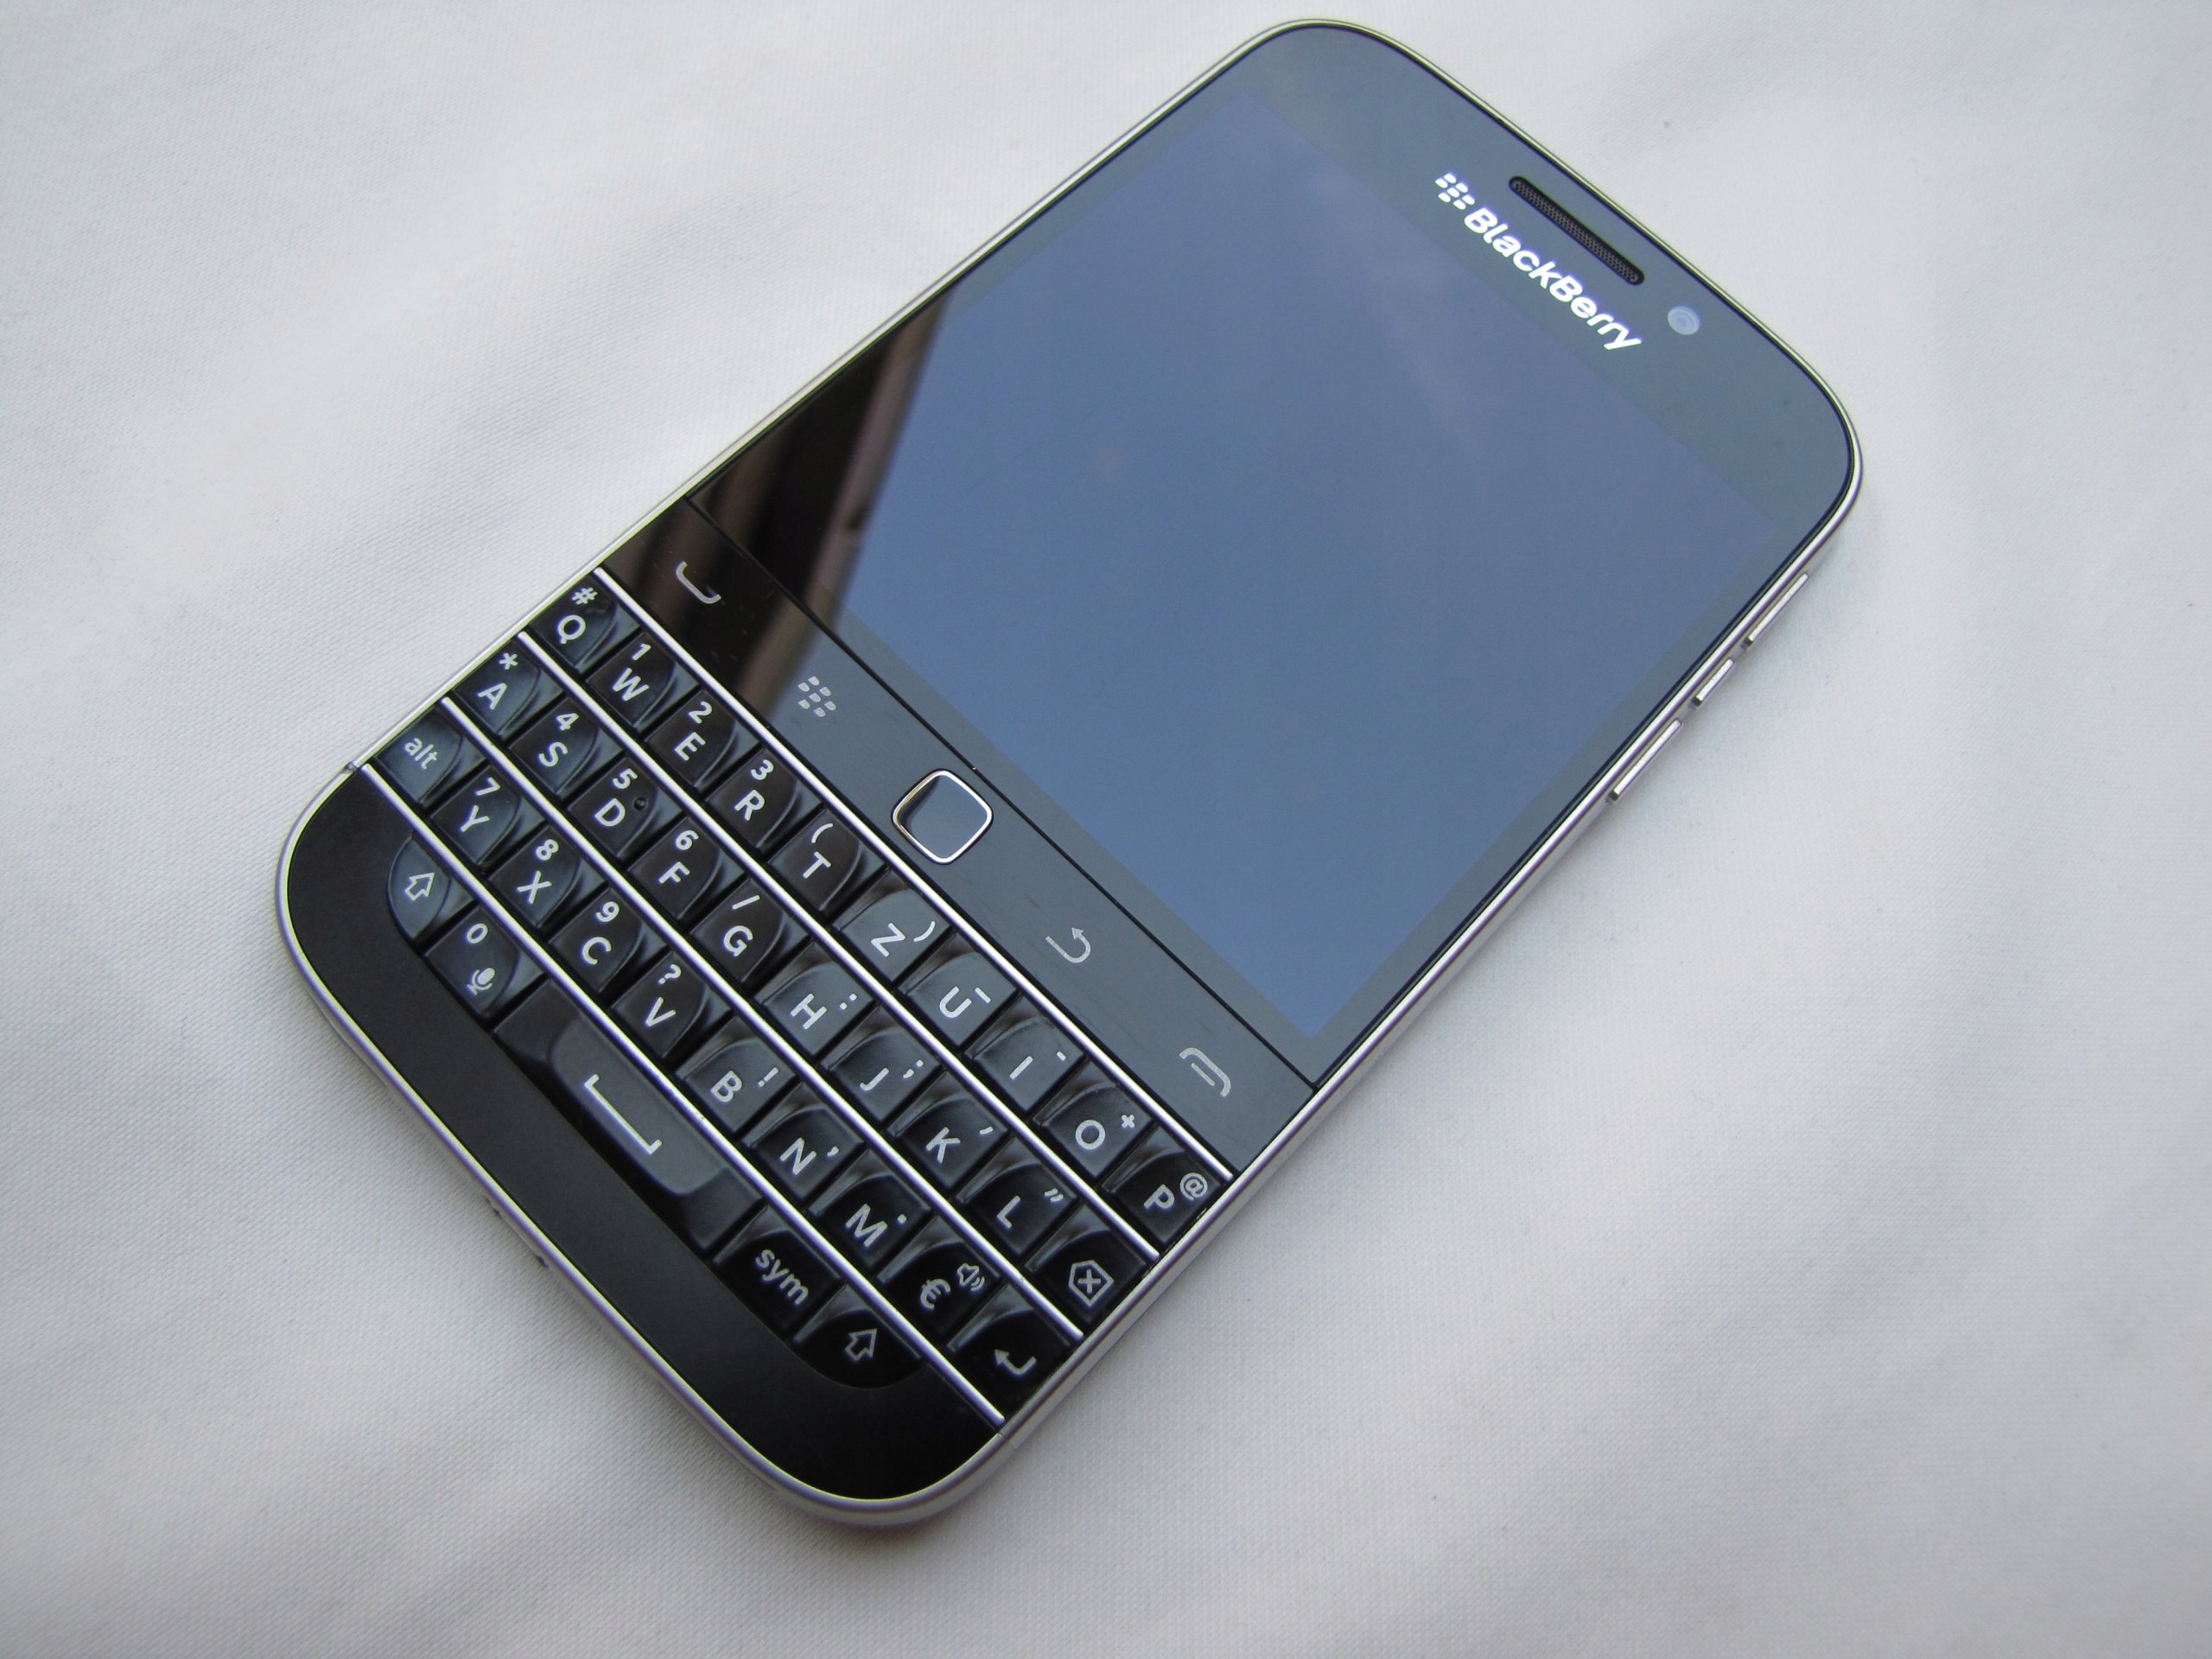 "El BlackBerry Q20 deberá llamarse BlackBerry Classic" John Chen - Social Geek